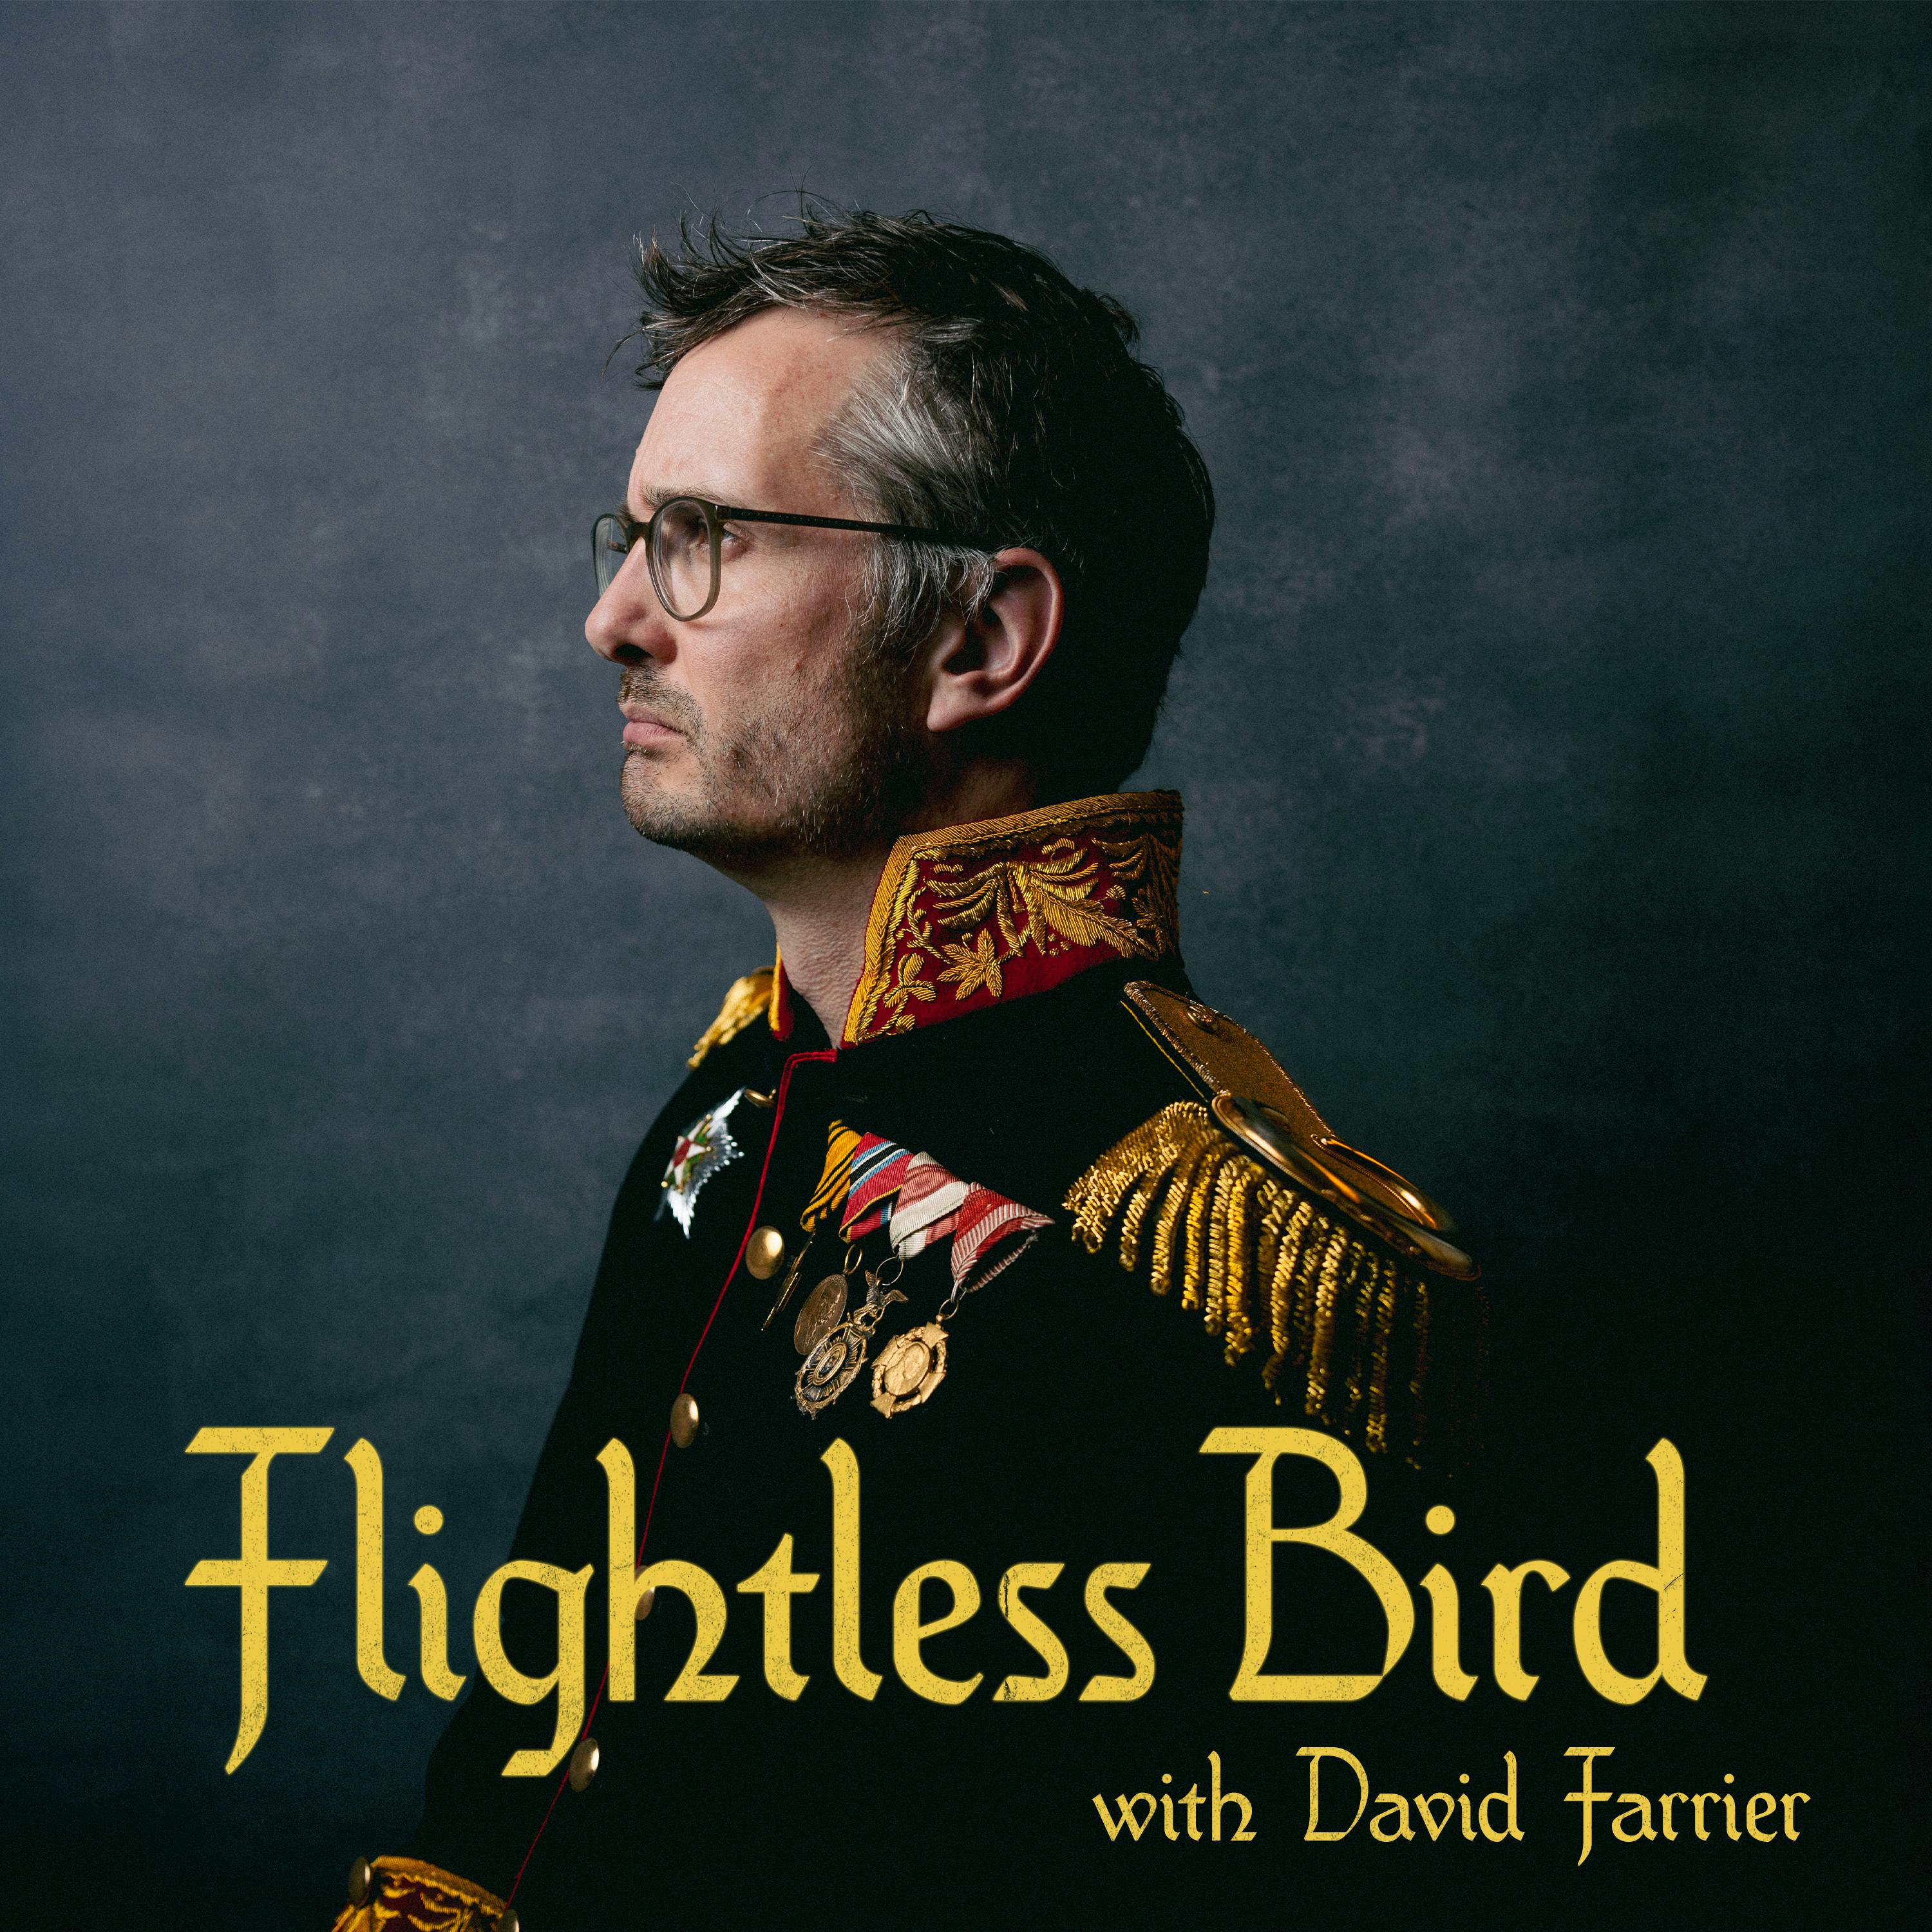 Flightless Bird: Renaissance Faire